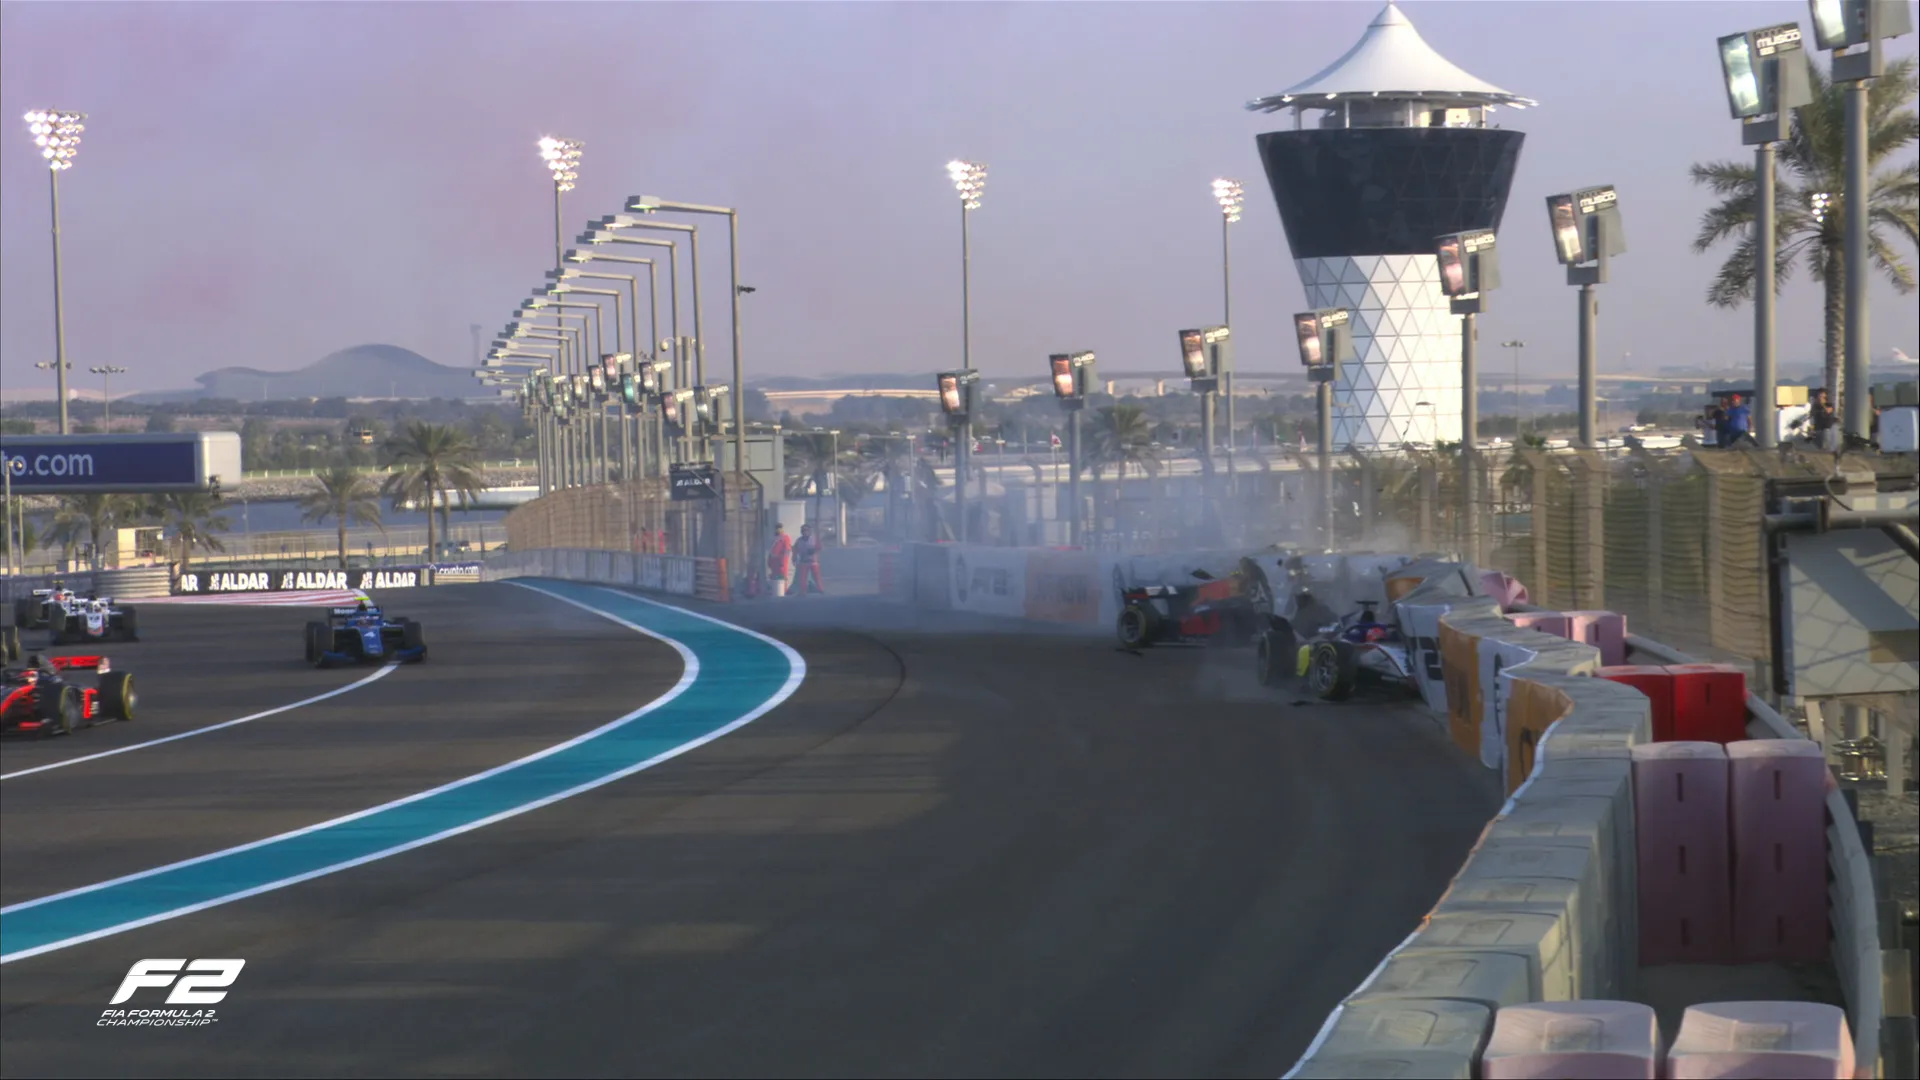 WATCH | India's F2 driver Jehan Daruvala involved in fatal crash during Abu Dhabi GP